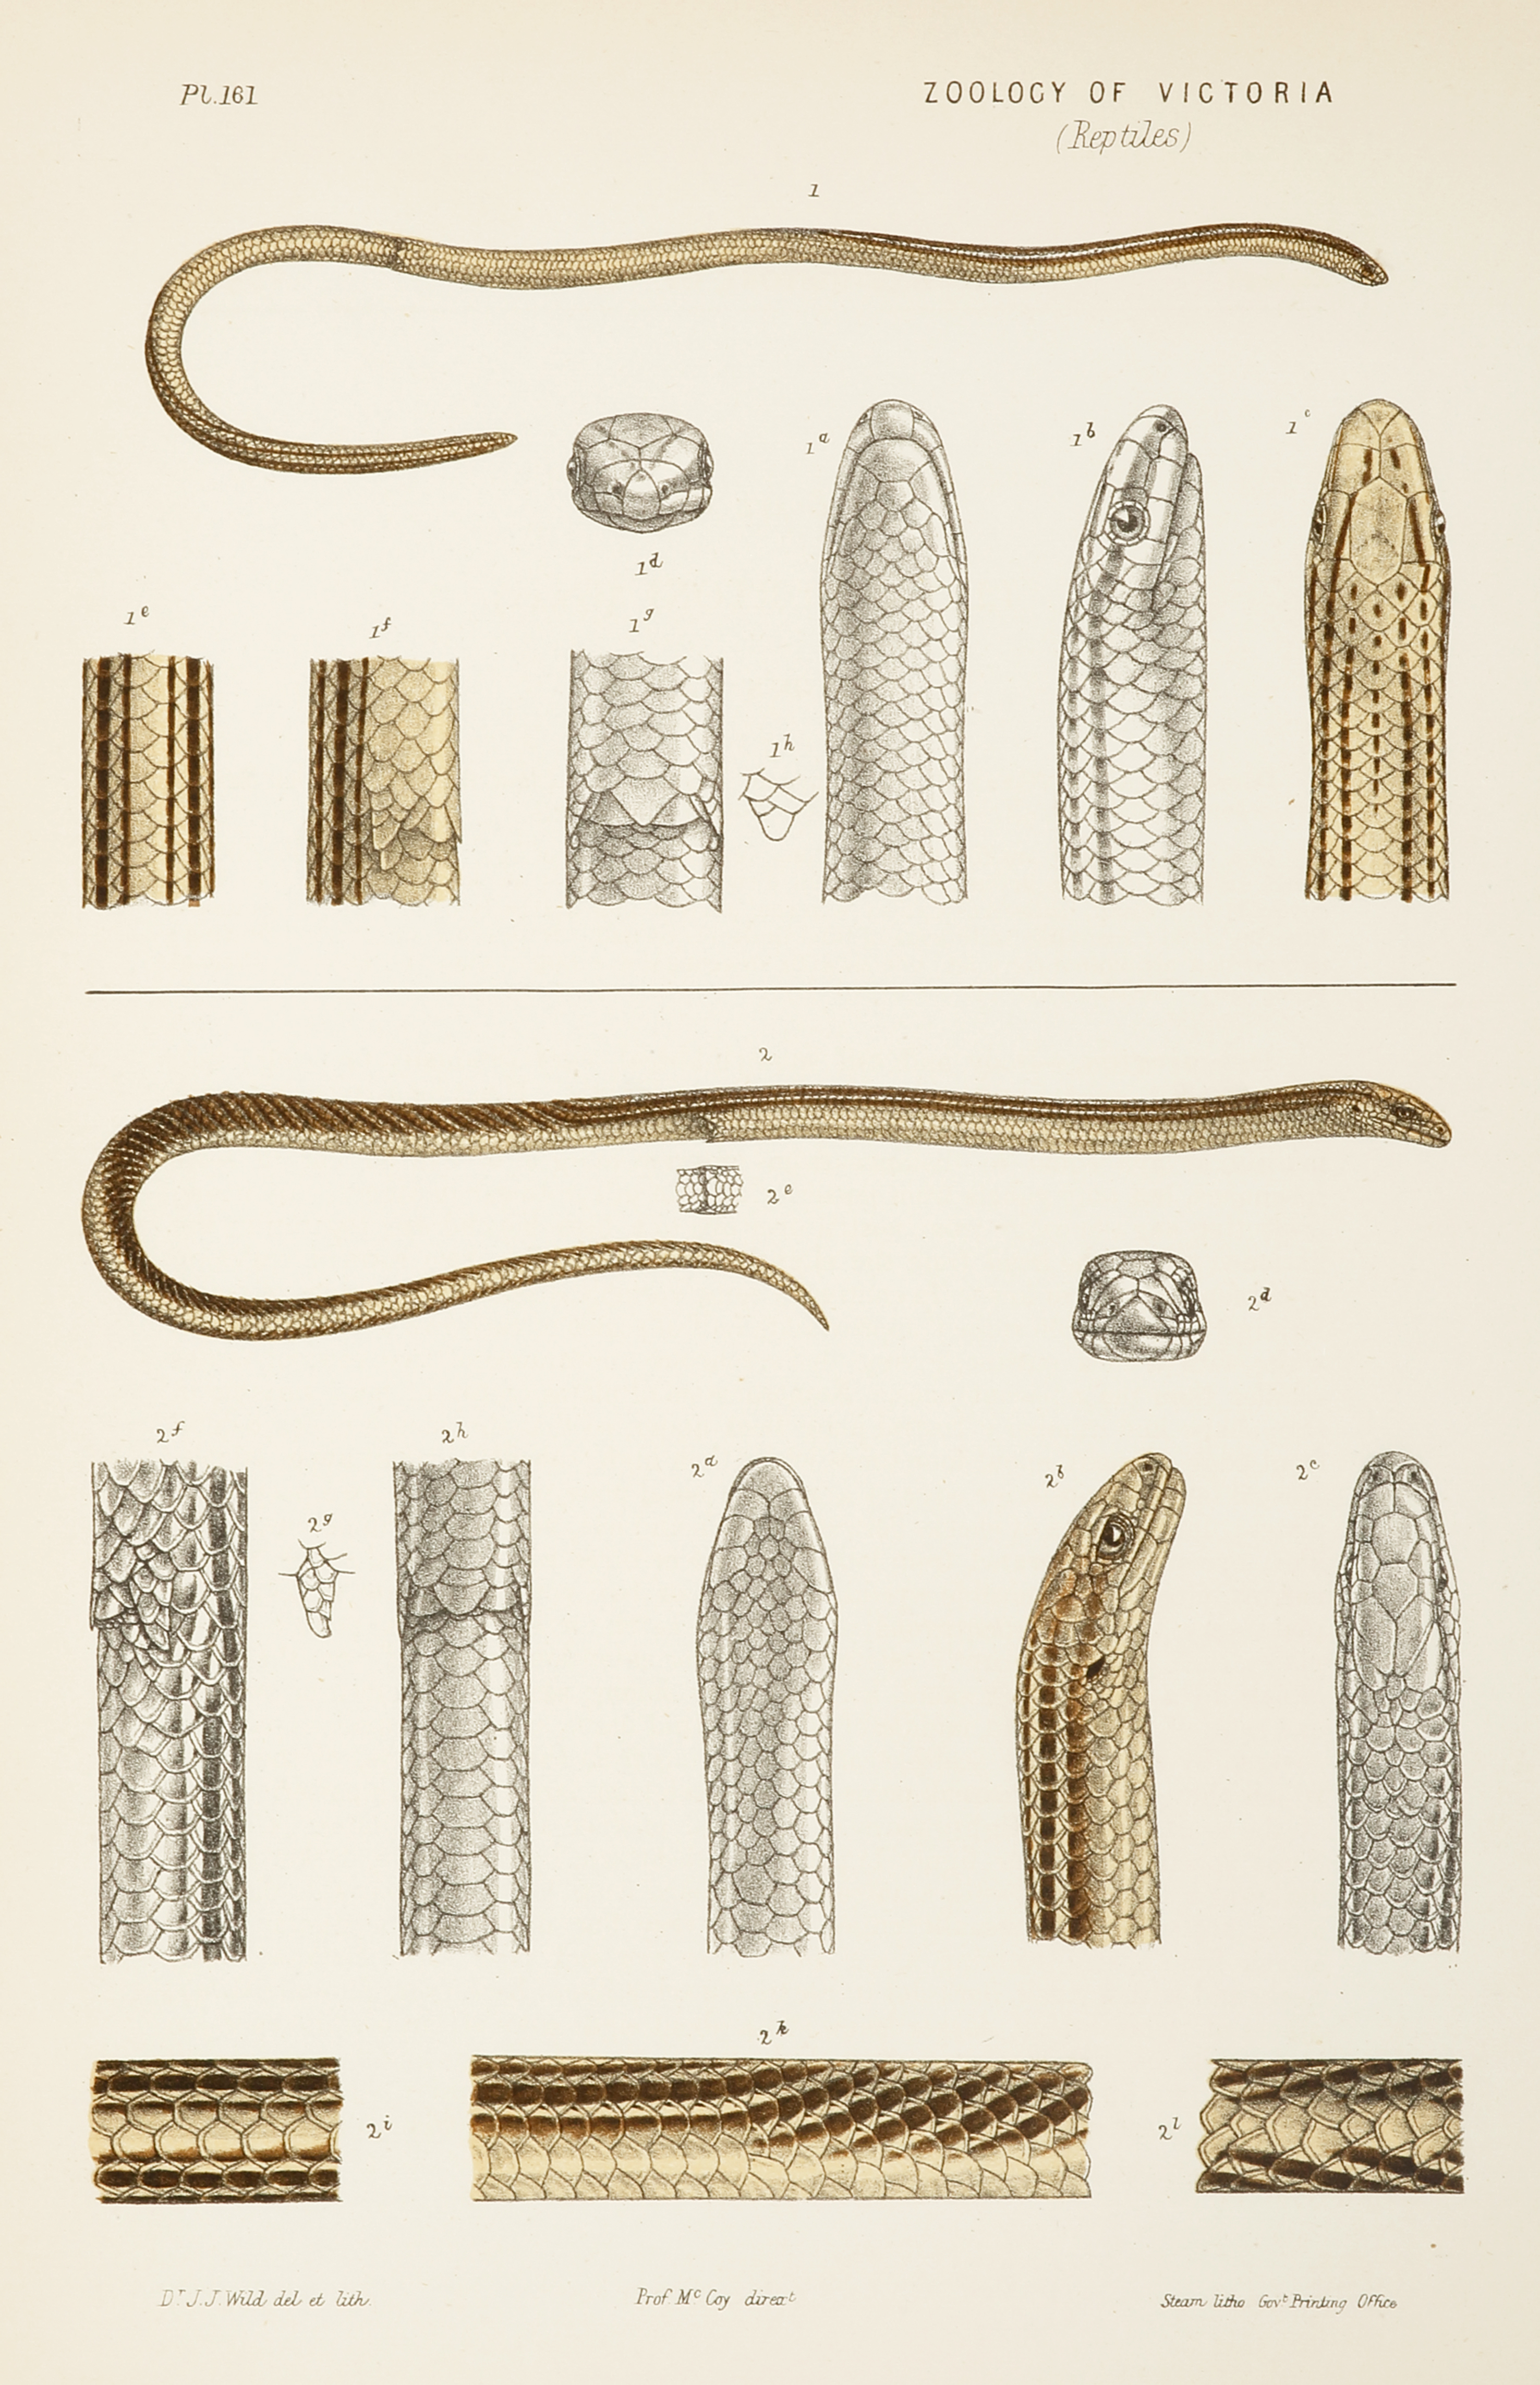 Burton's Lialis [Burton's Legless Lizard ], Lialis Burtoni - Antique Print from 1888